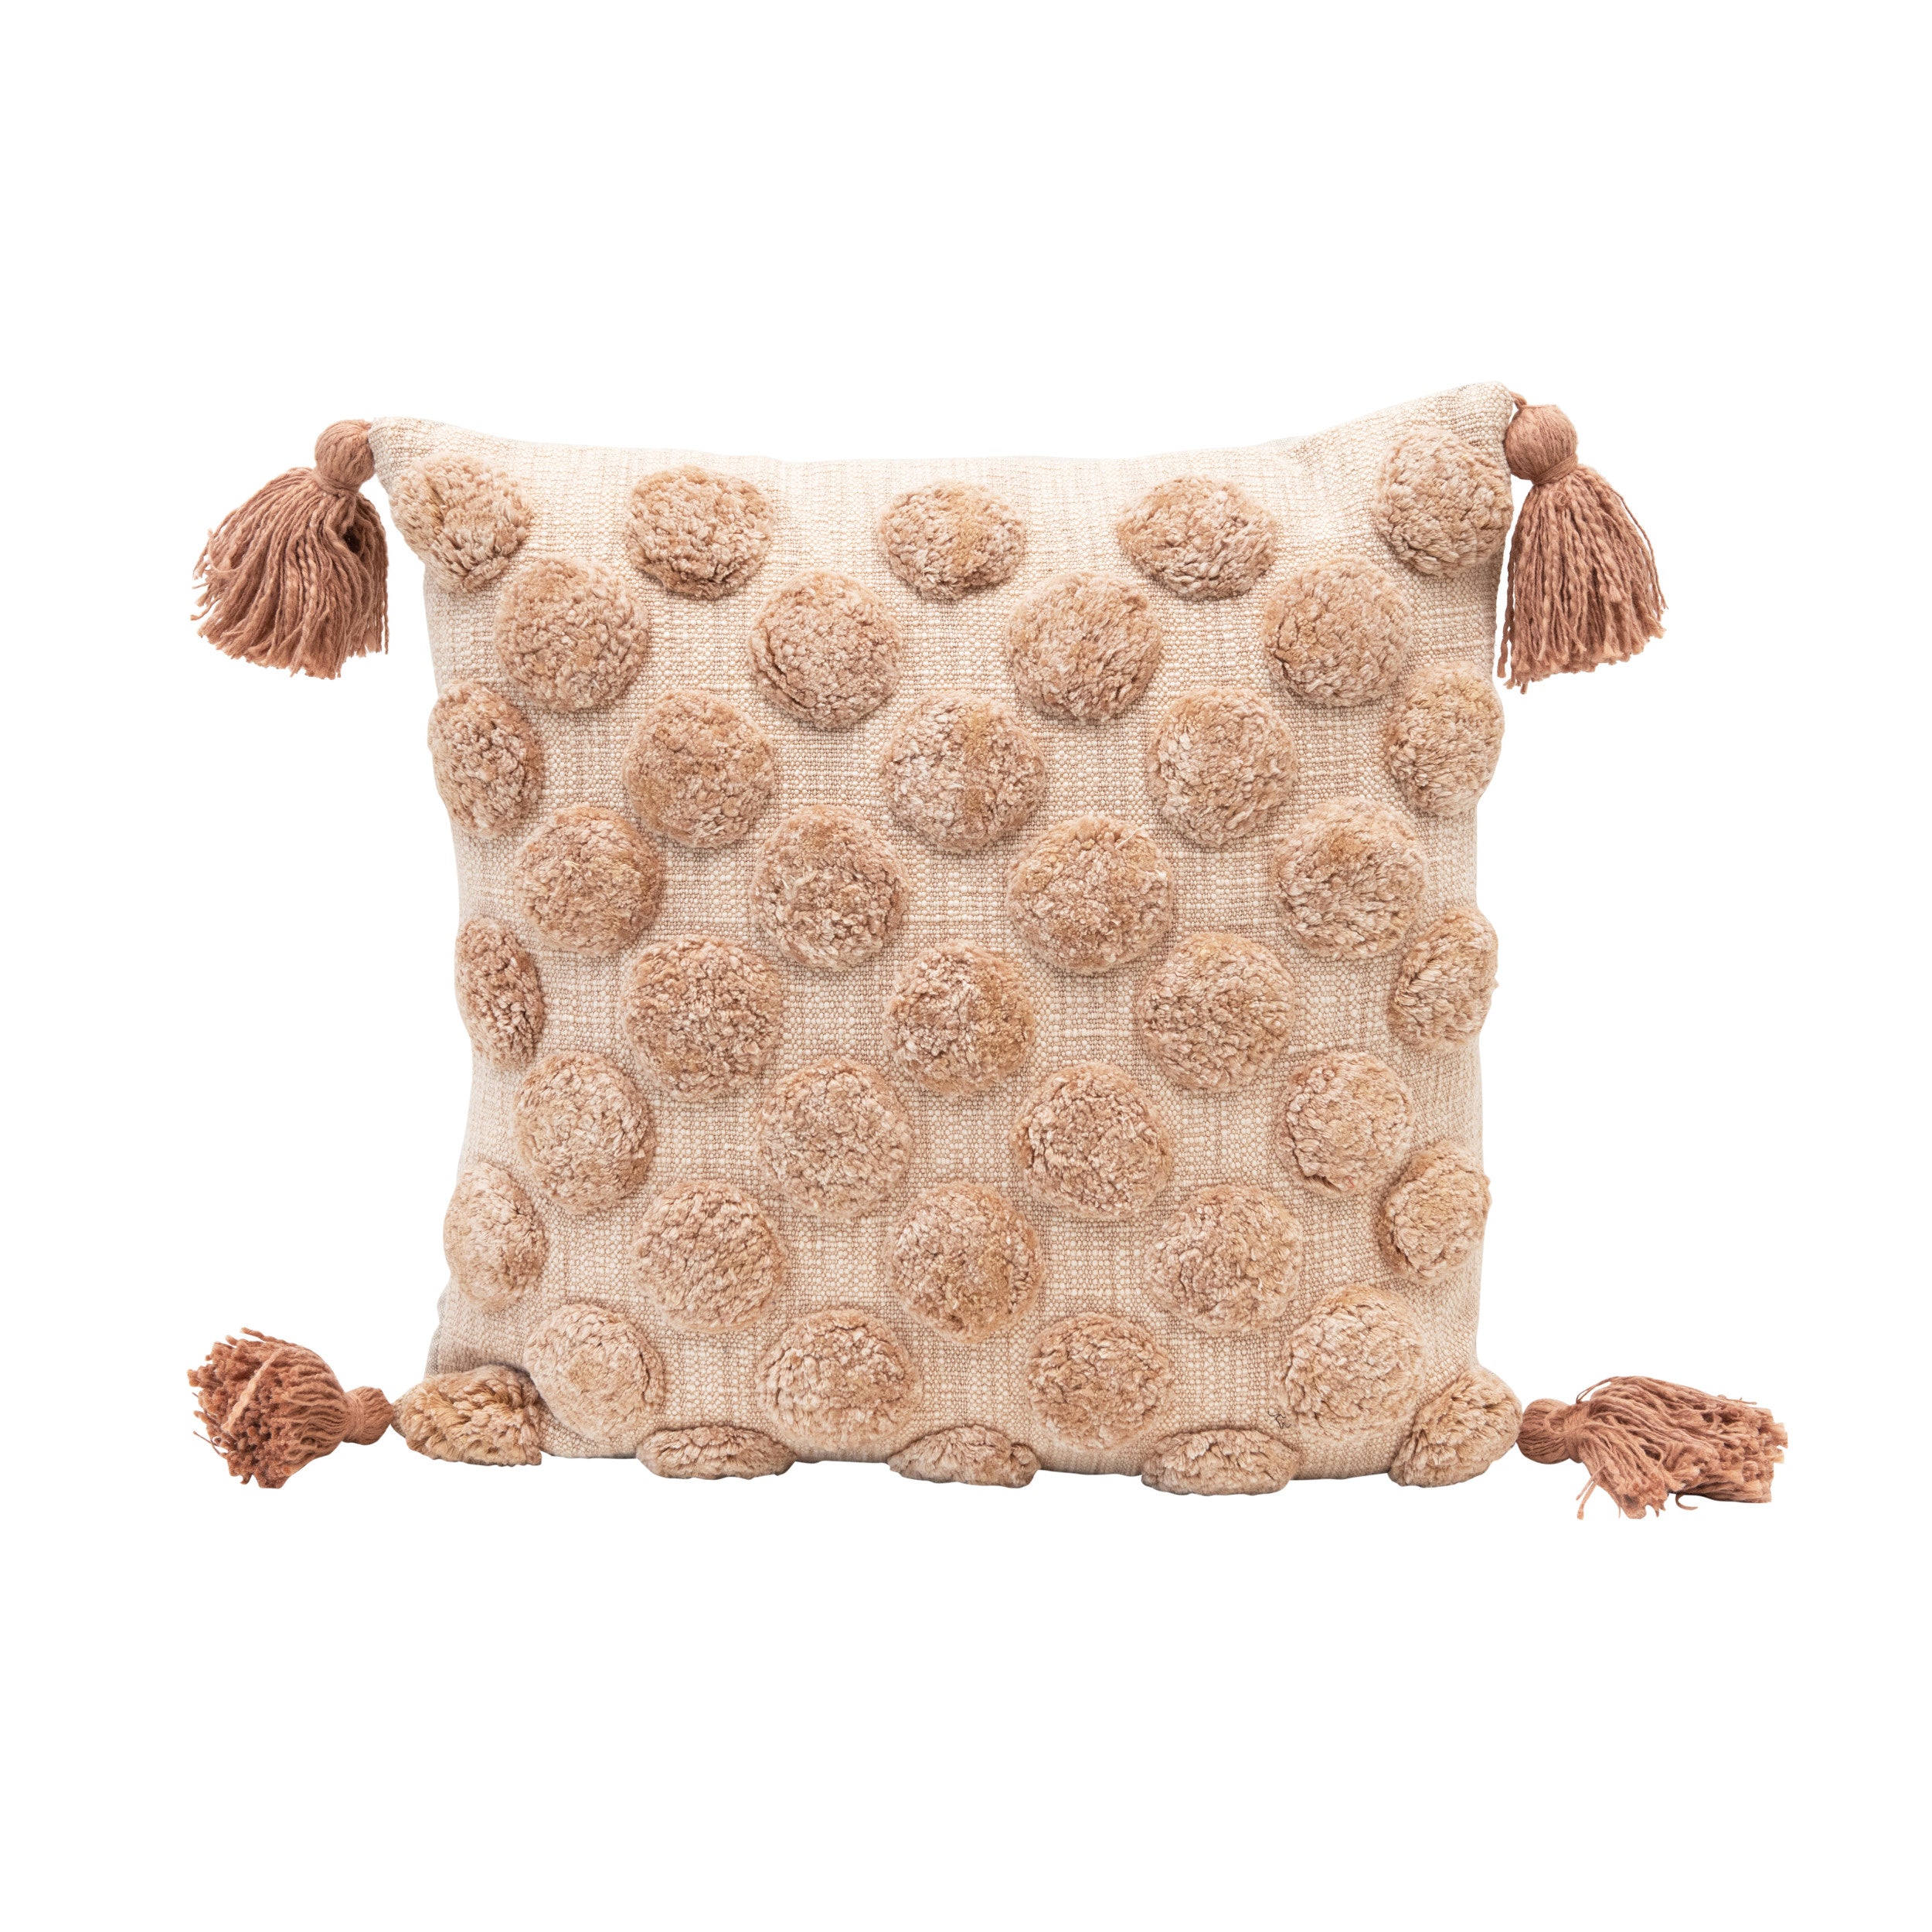 18" Square Cotton Tufted Dot Pillow w/ Tassels, Blush Color